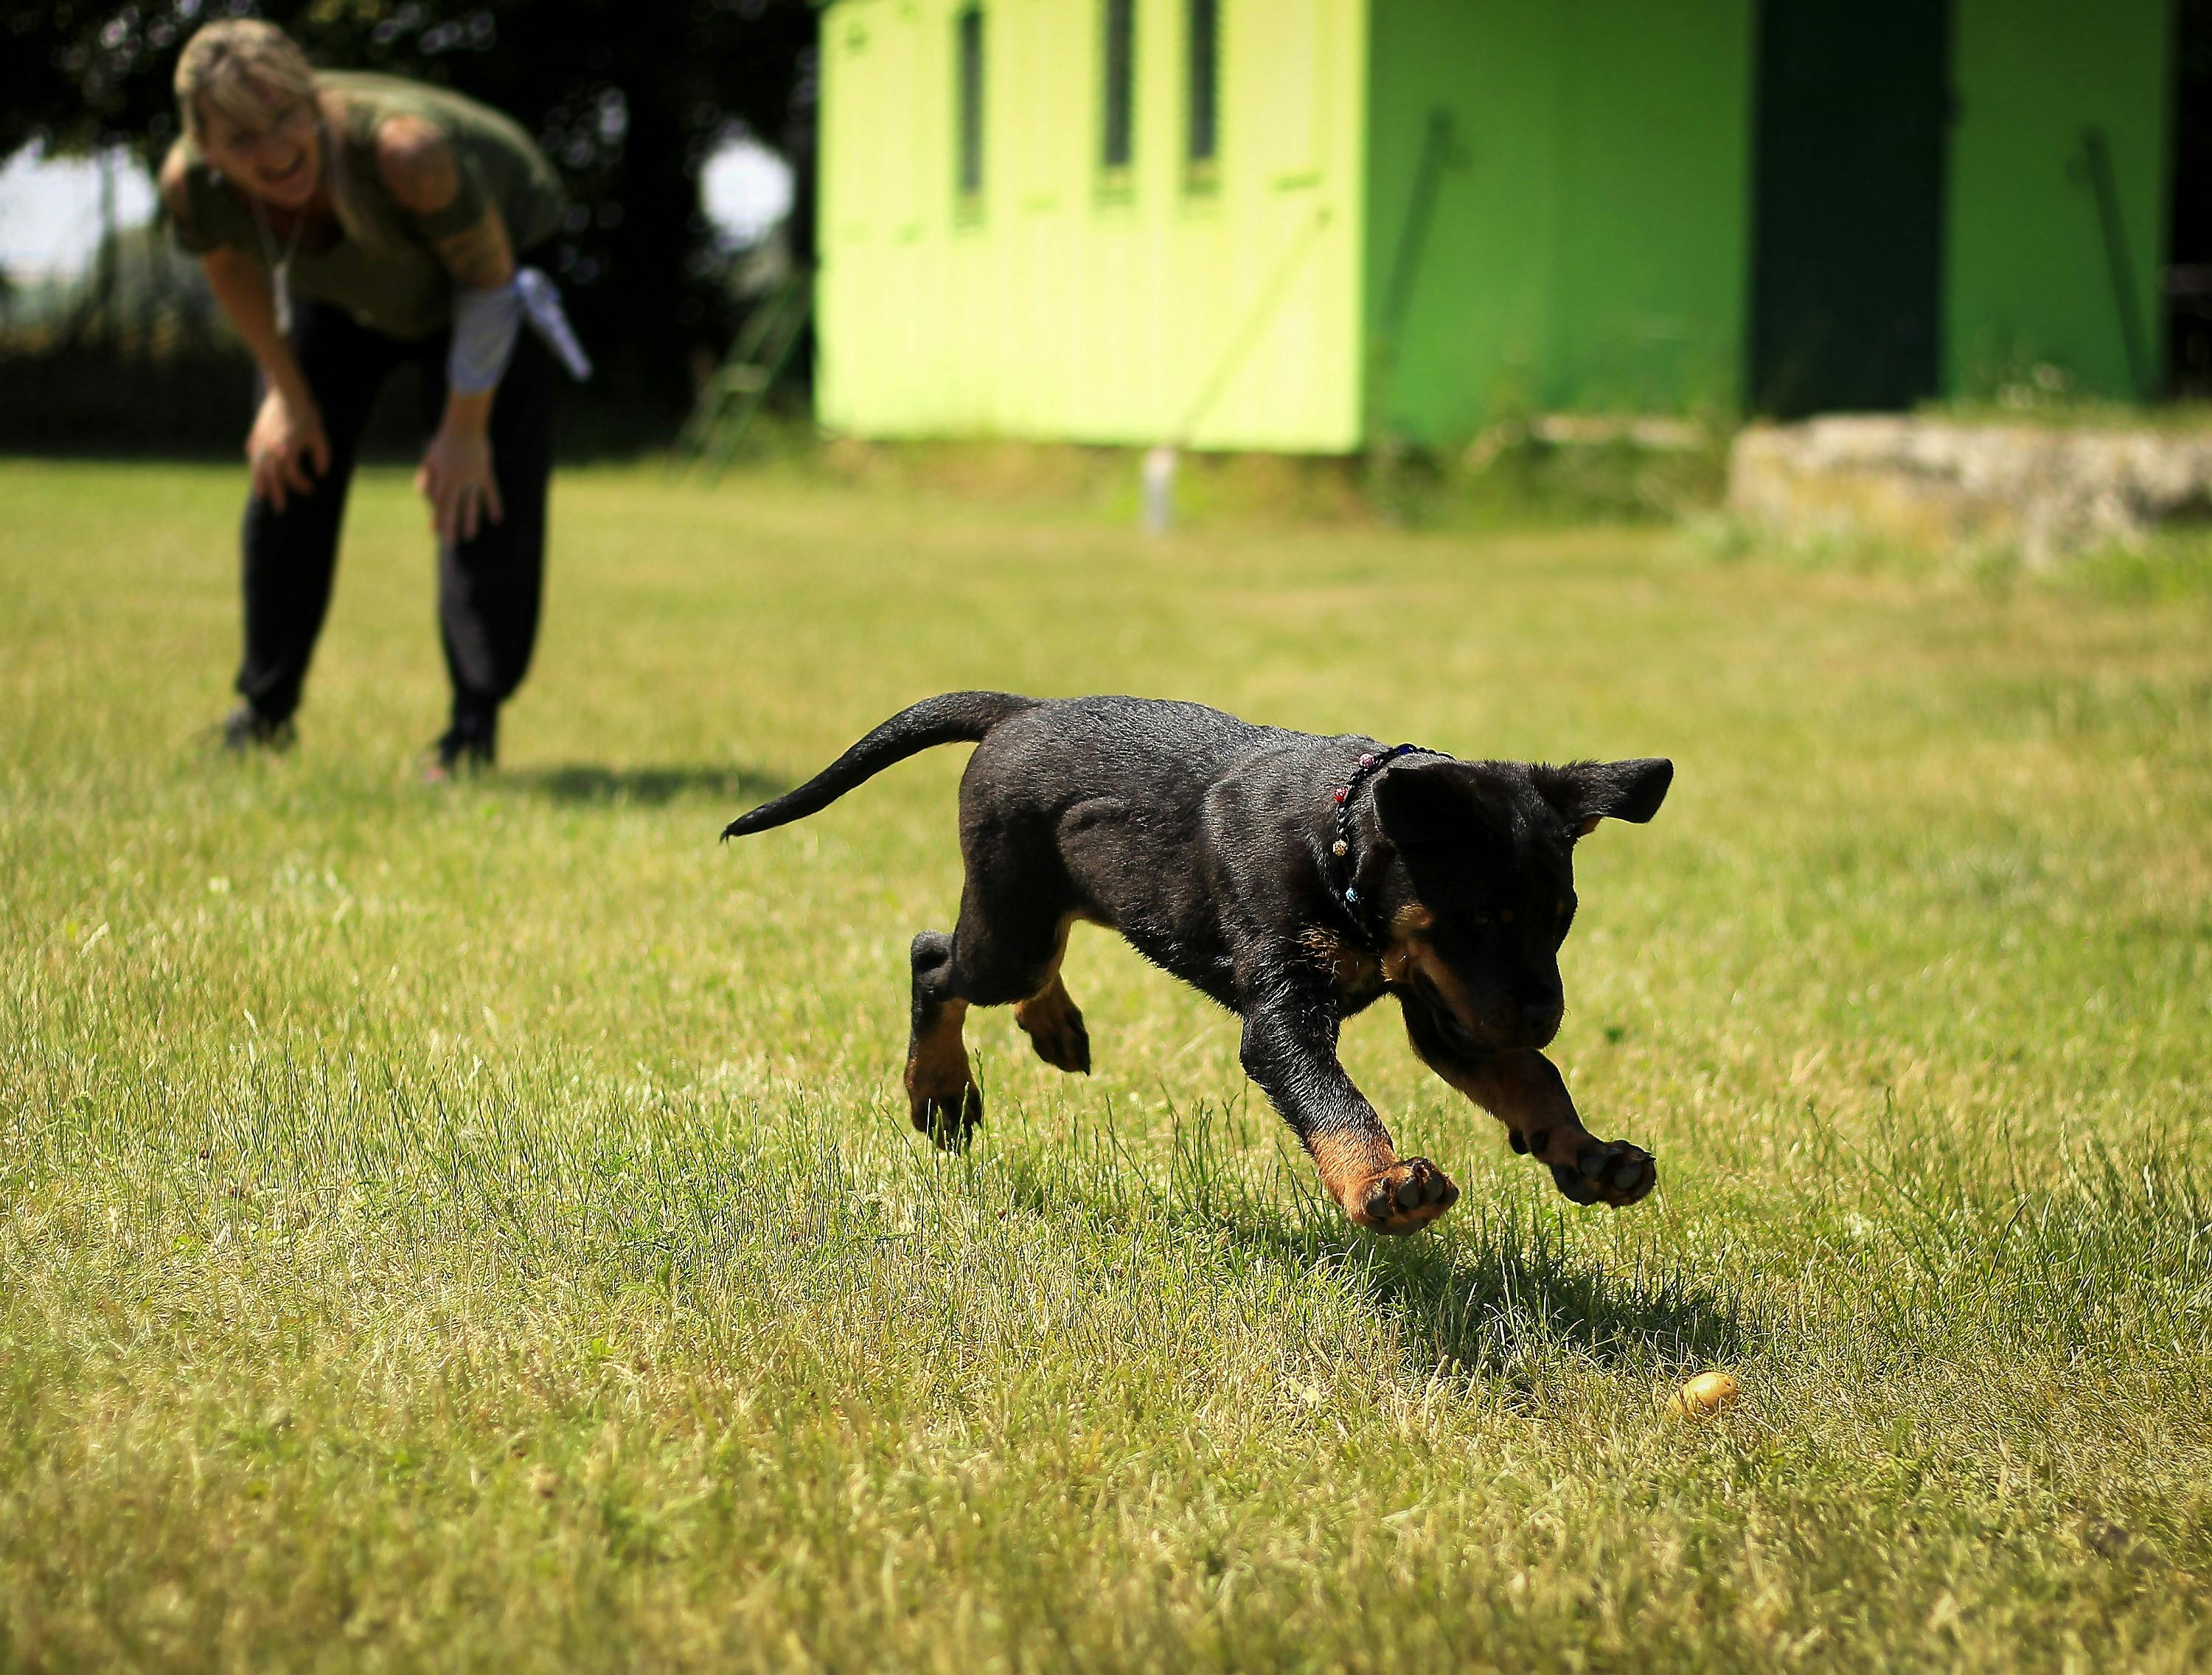 Rottweiler Puppy Running on Lawn Grass